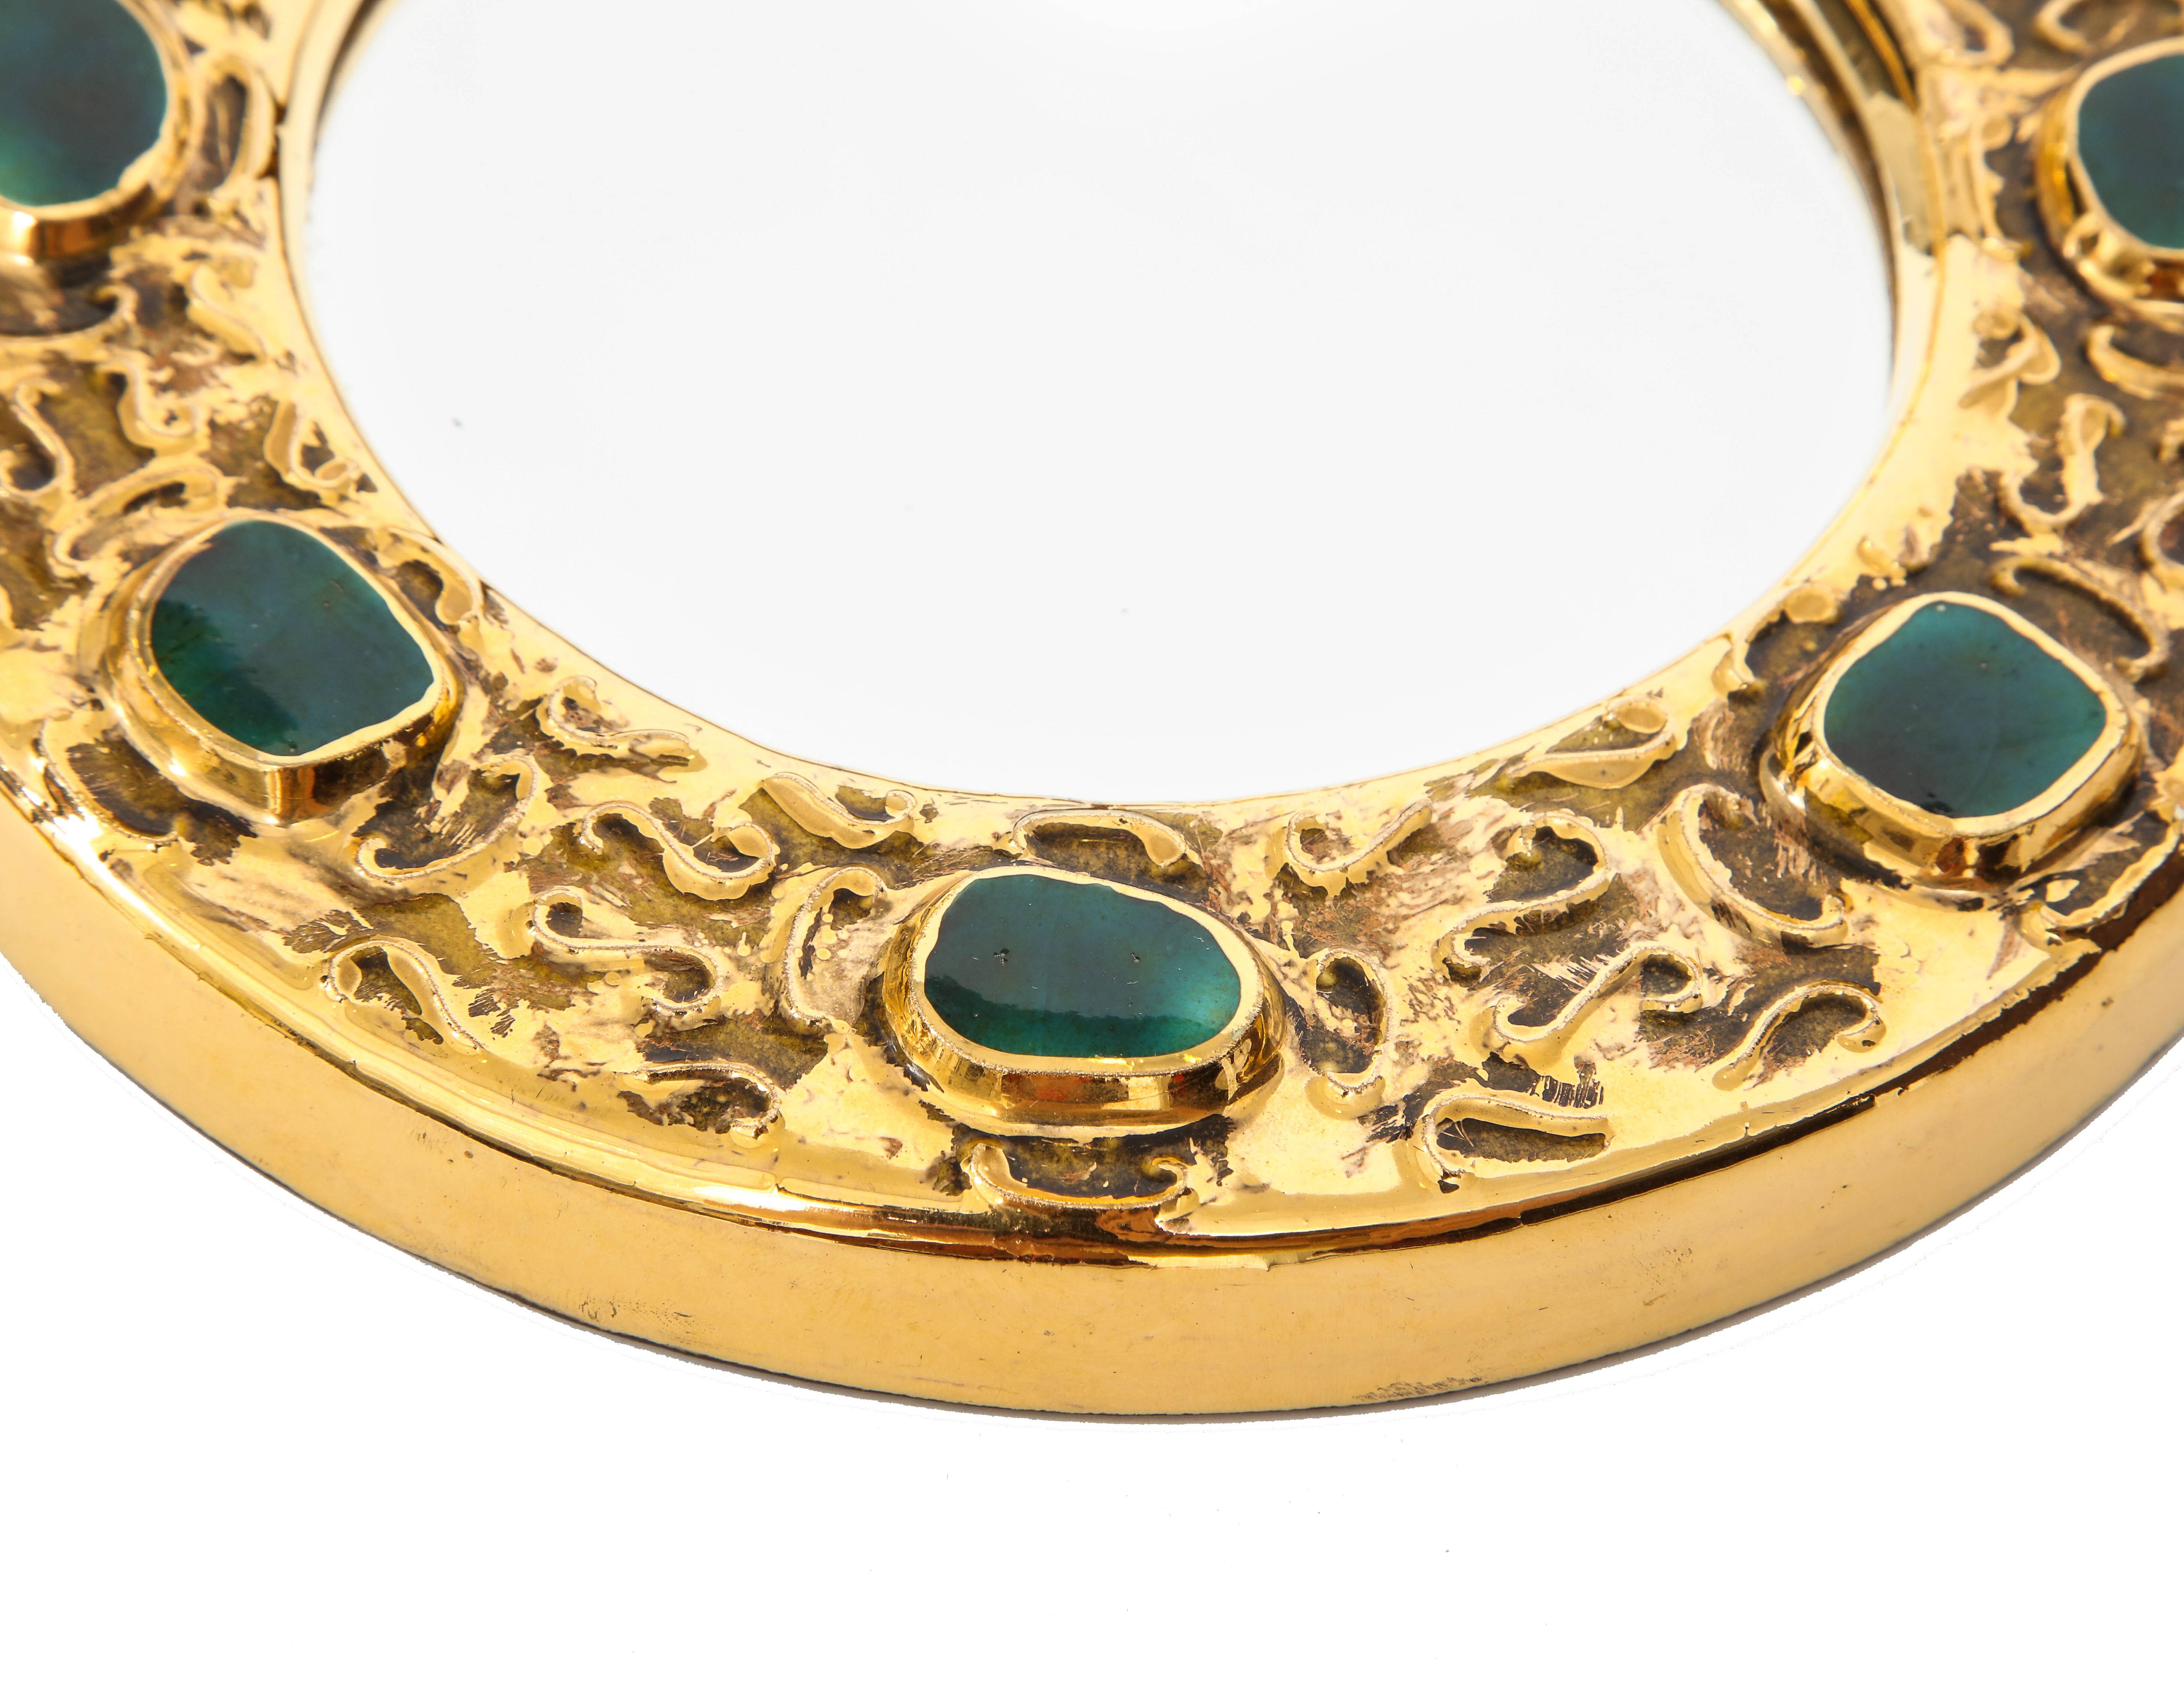 Mid-Century Modern Francois Lembo Mirror, Ceramic, Gold, Green, Jeweled, Signed